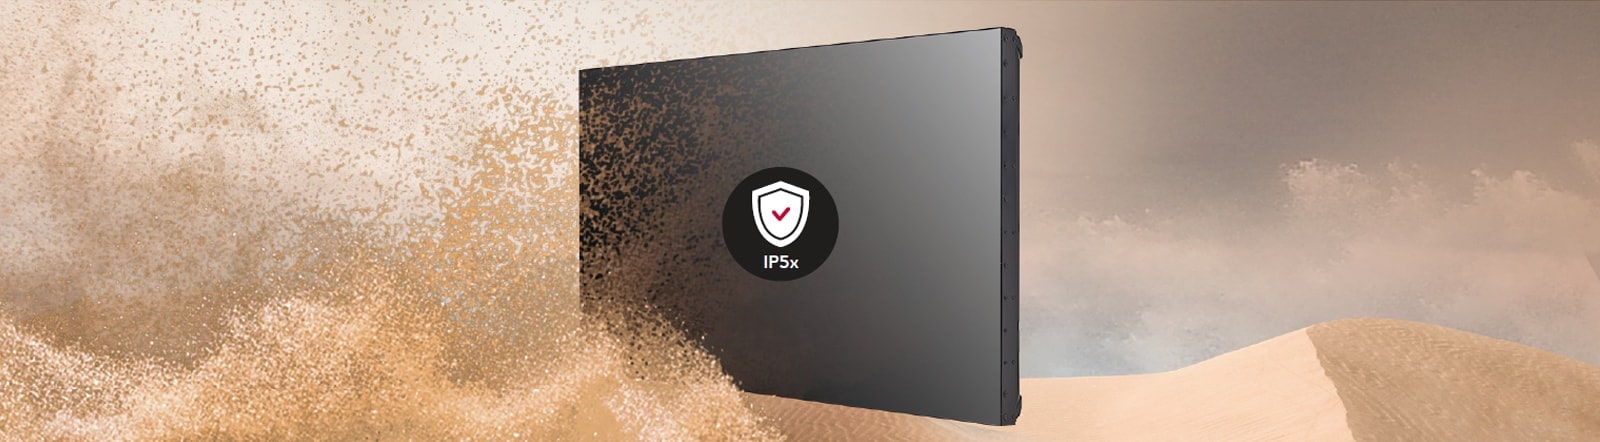 VH7J-H 具有 IP5x 防塵認證，可保護產品不受灰塵的影響。